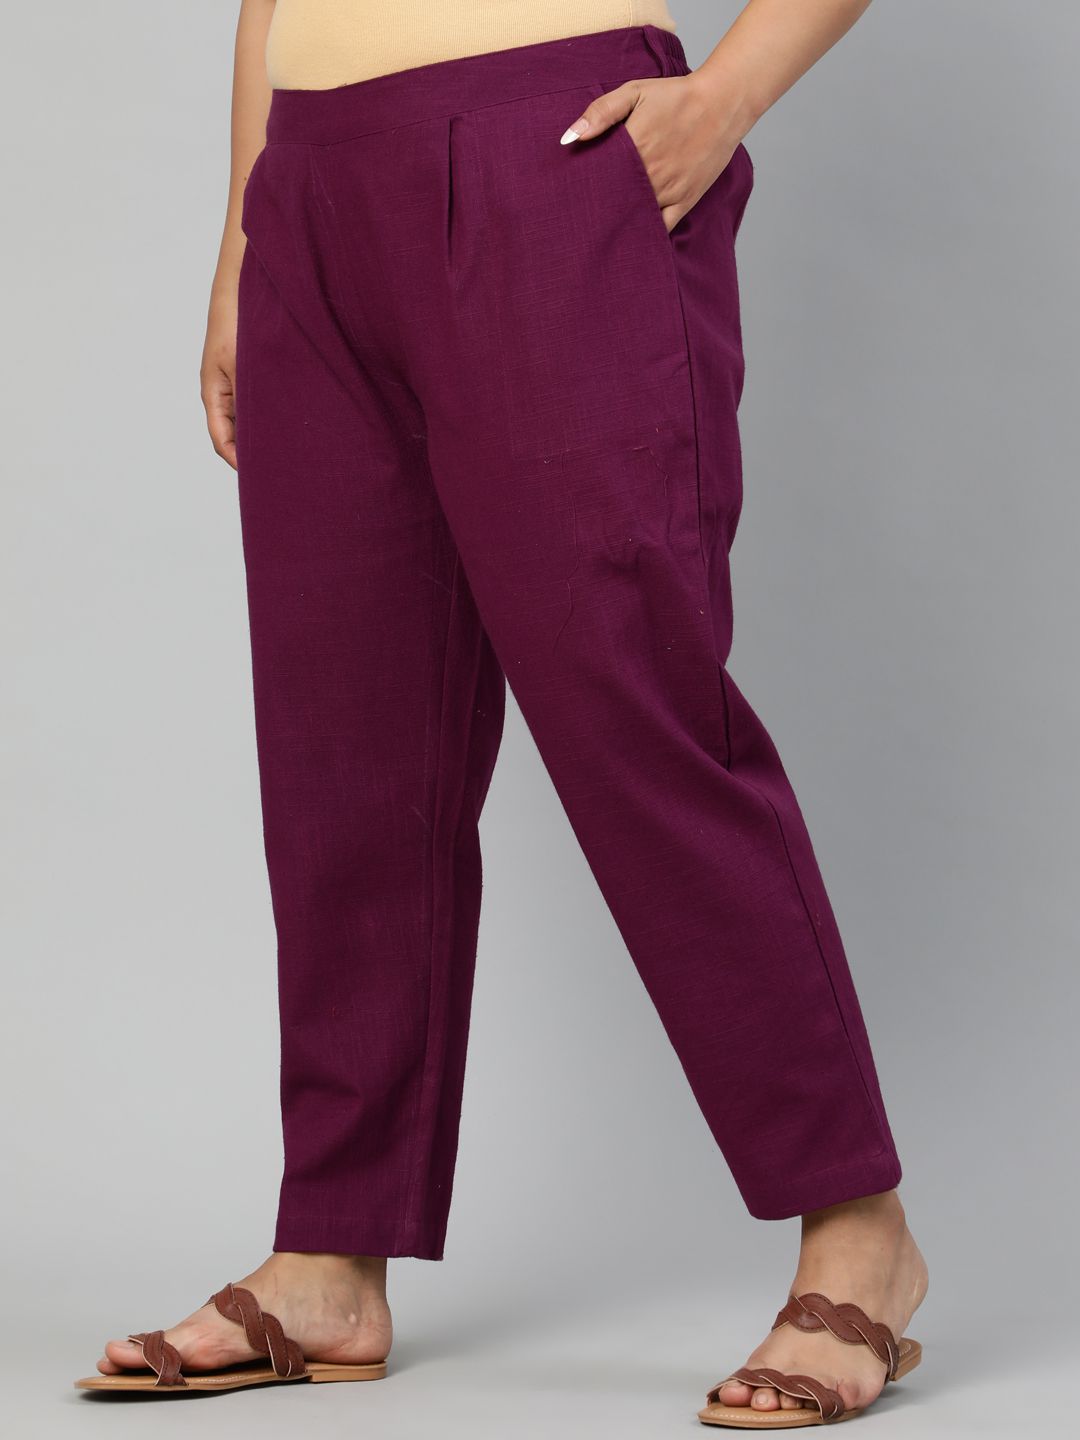 Shop Casual pants for women